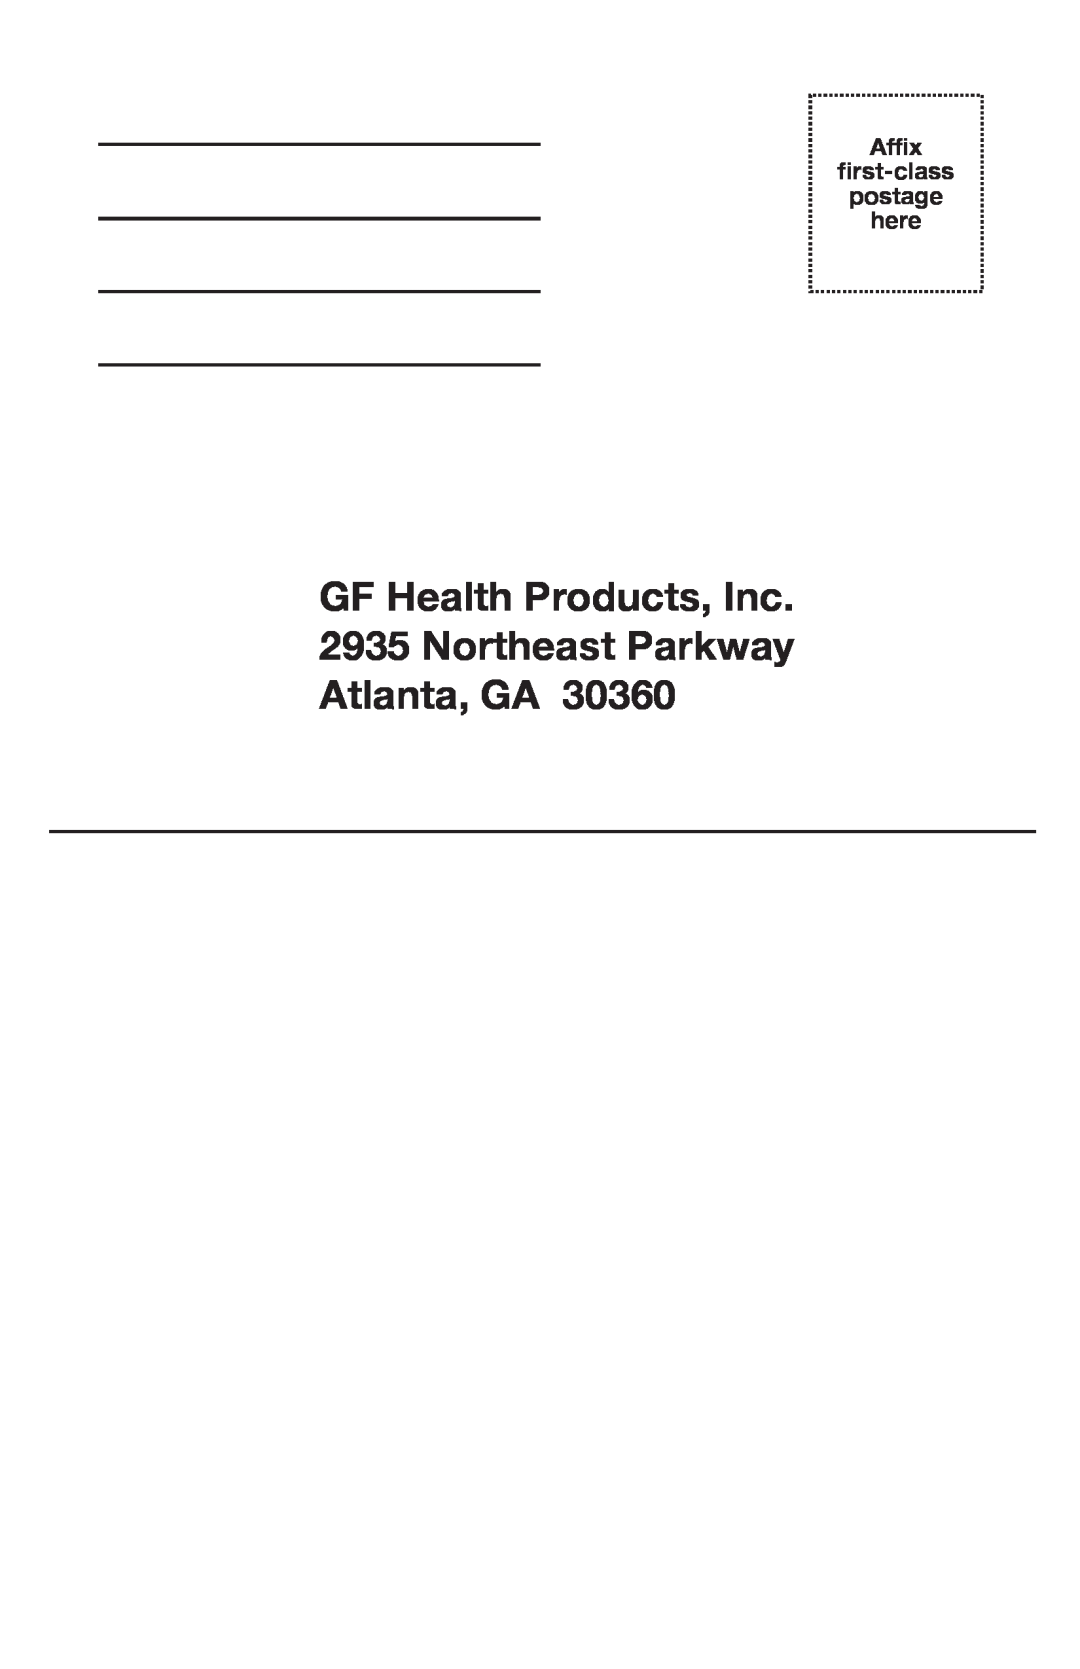 Graham Field JB0160-015-220 GF Health Products, Inc 2935 Northeast Parkway Atlanta, GA, Affix first-class postage here 